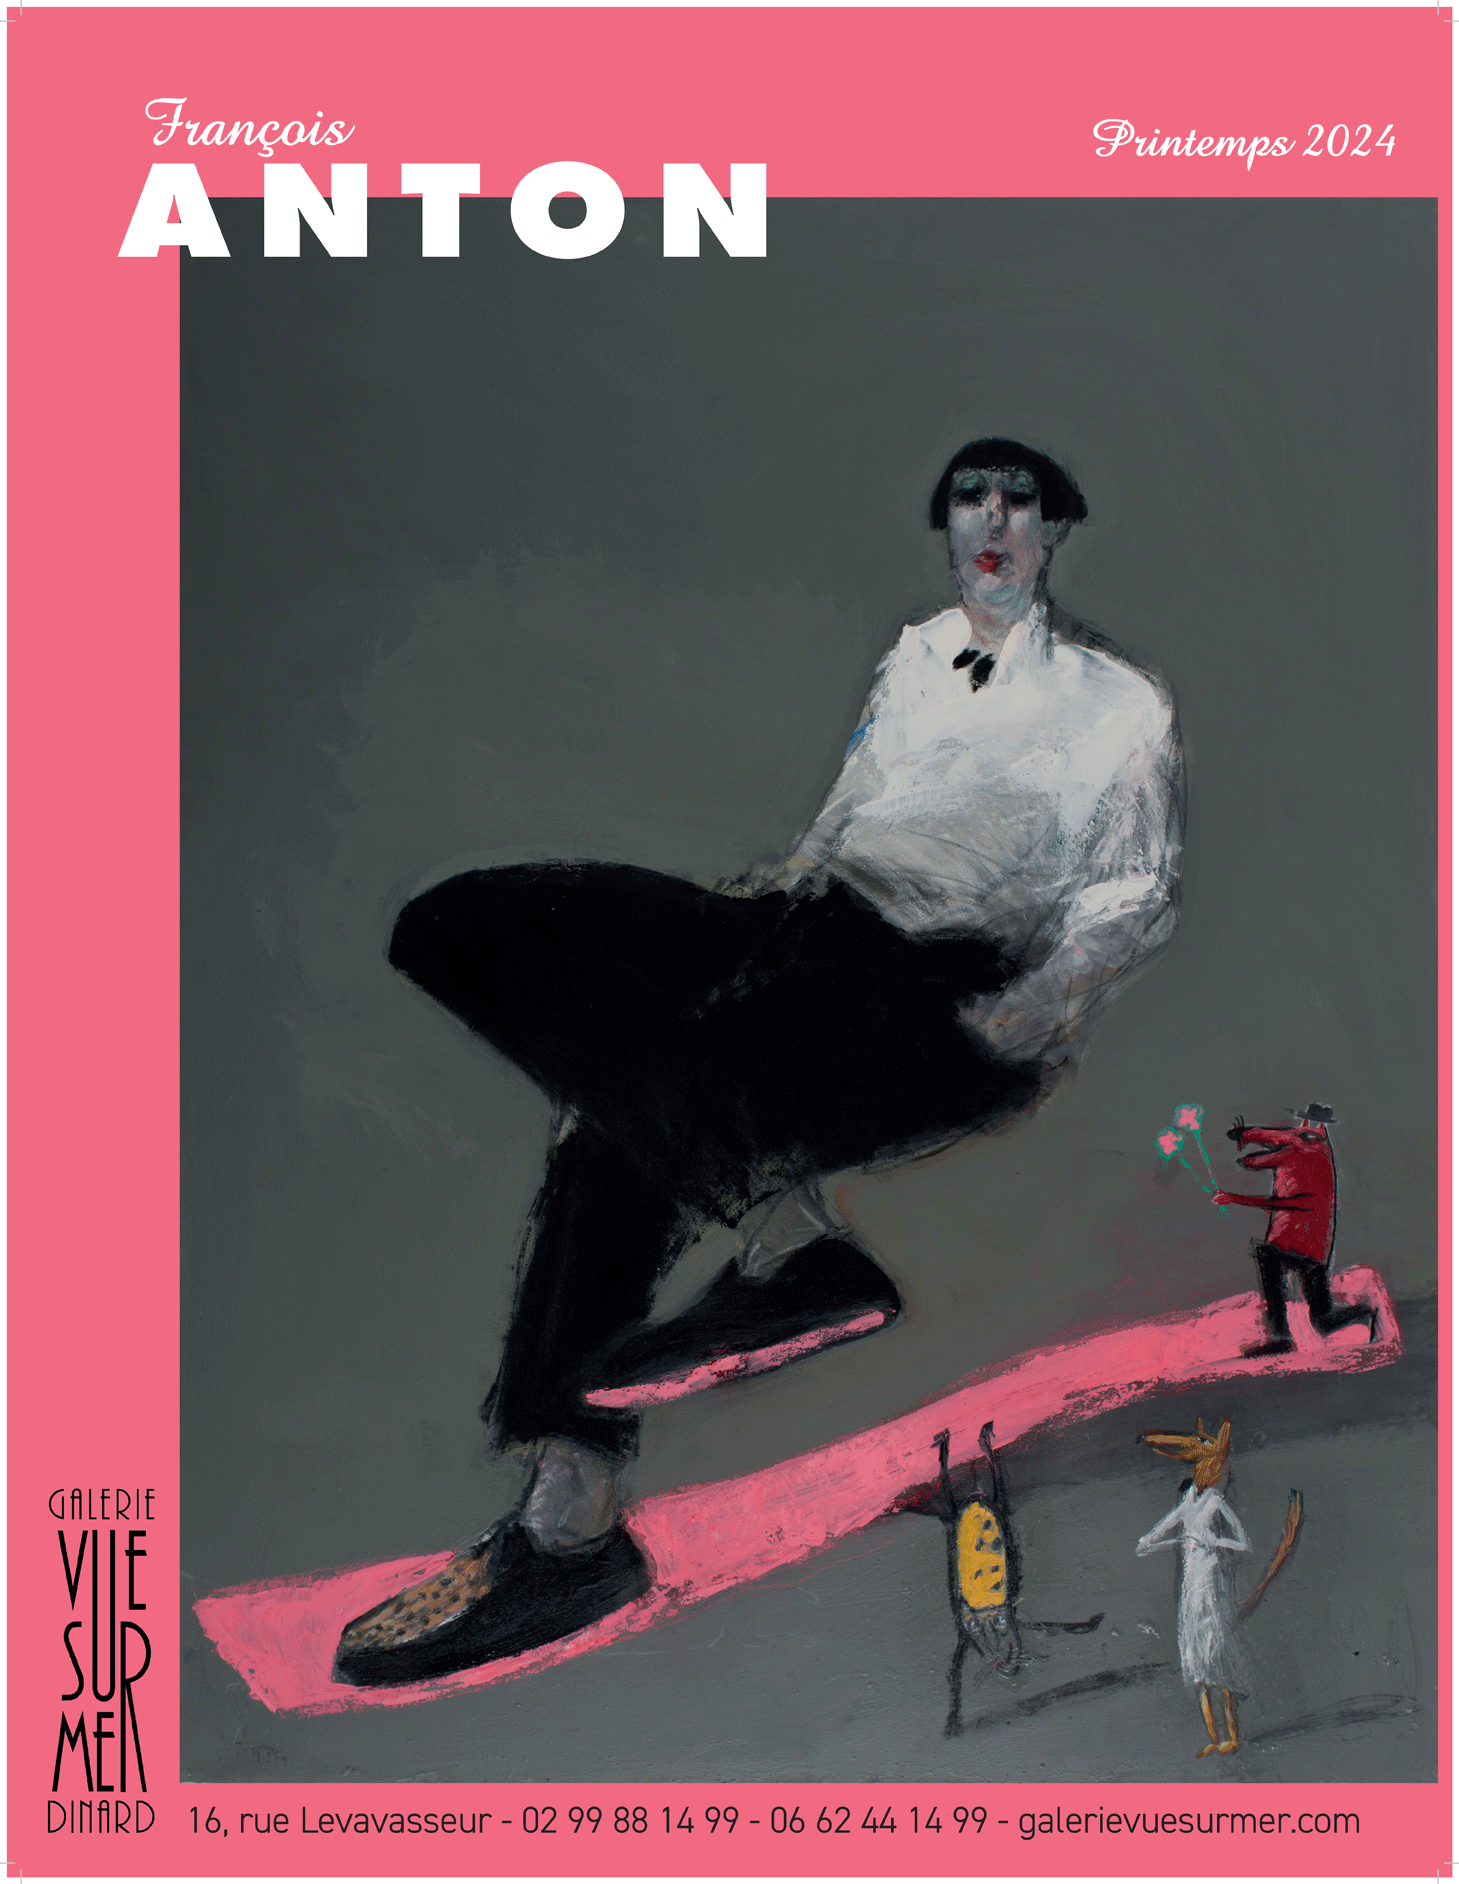 Francois Anton